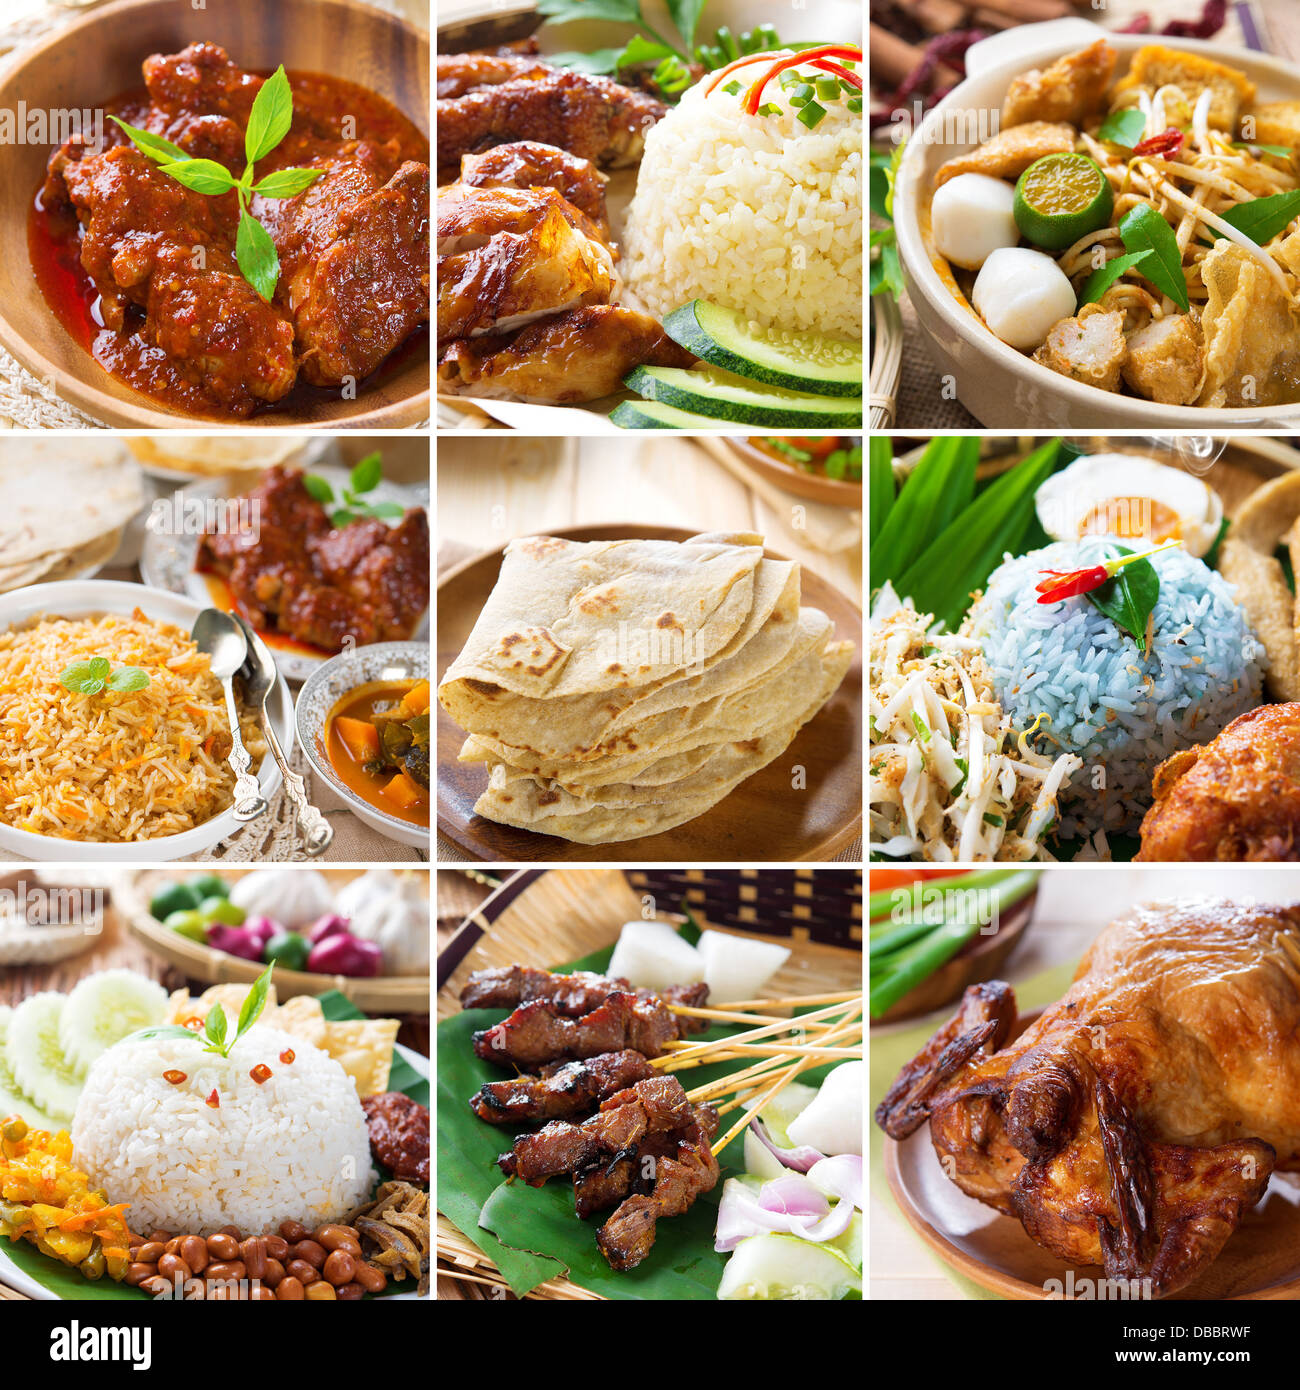 Asian food collection. Various Asia cuisine, curry, rice, noodles, biryani, roti chapatti, nasi kerabu, nasi lemak, satay and roast chicken. Stock Photo